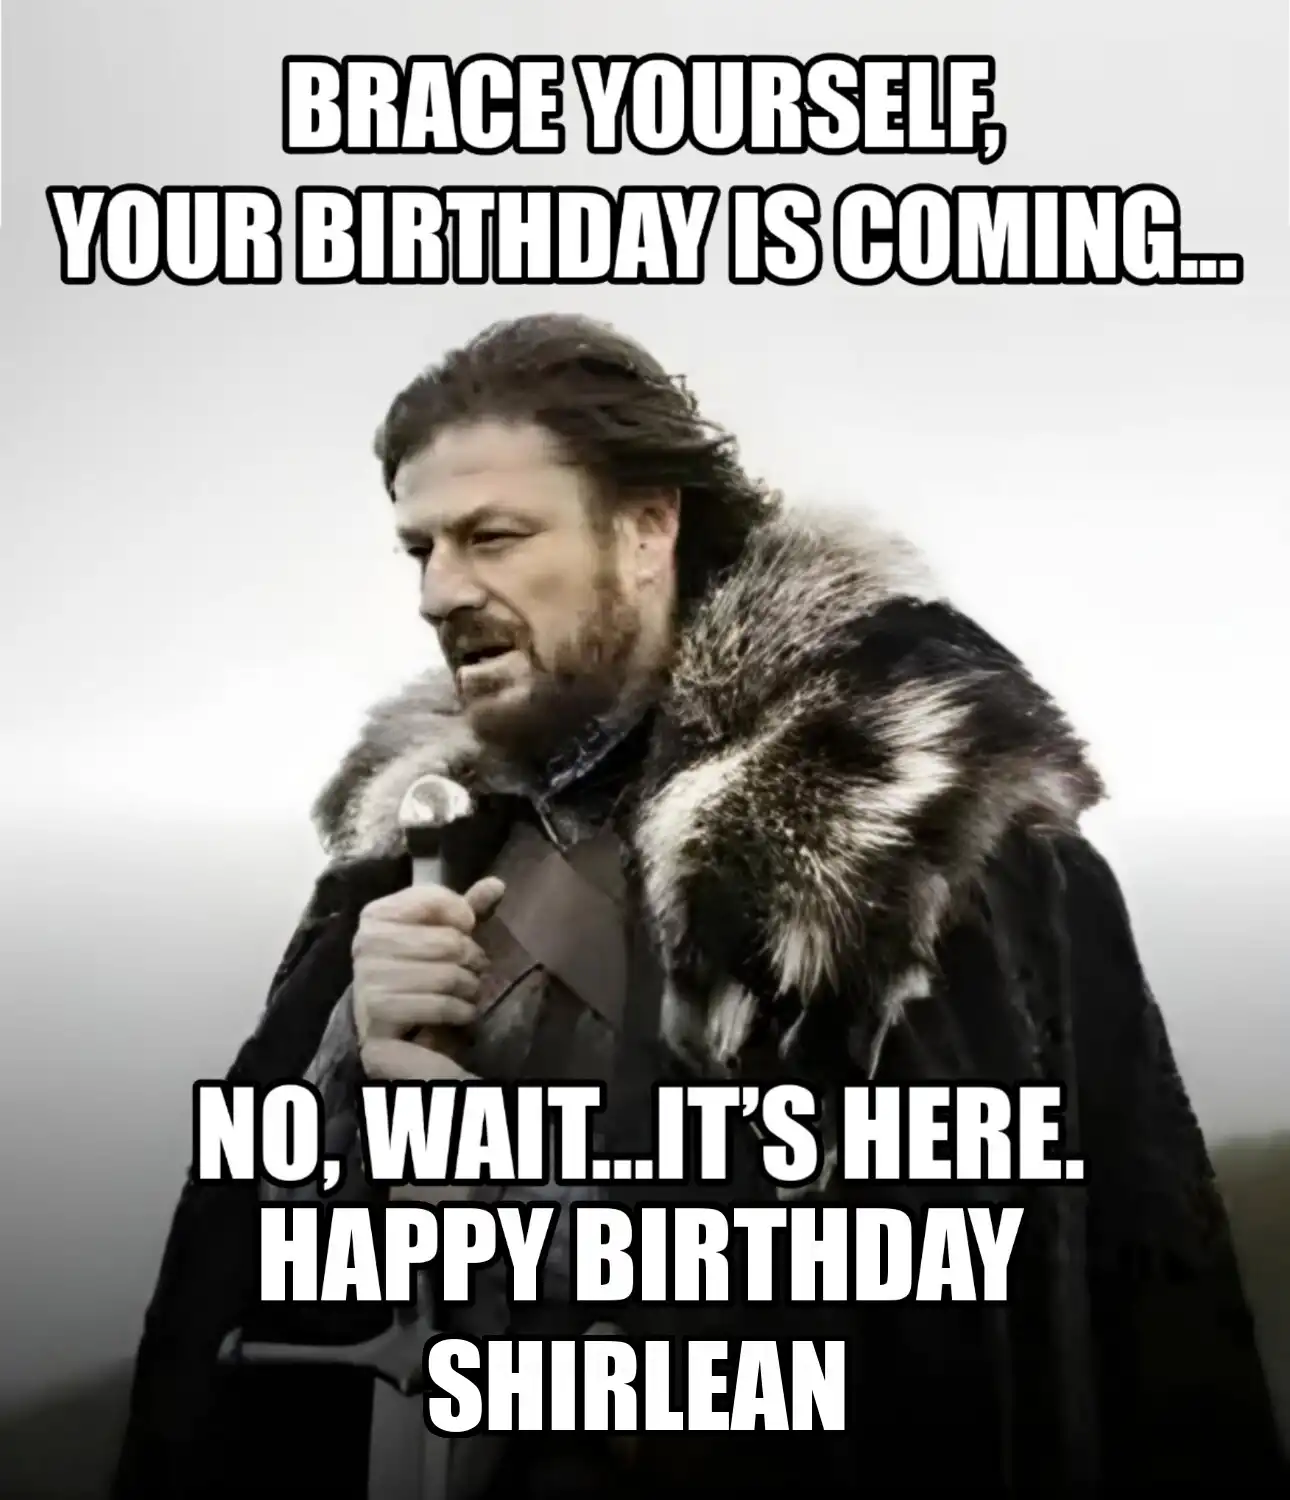 Happy Birthday Shirlean Brace Yourself Your Birthday Is Coming Meme